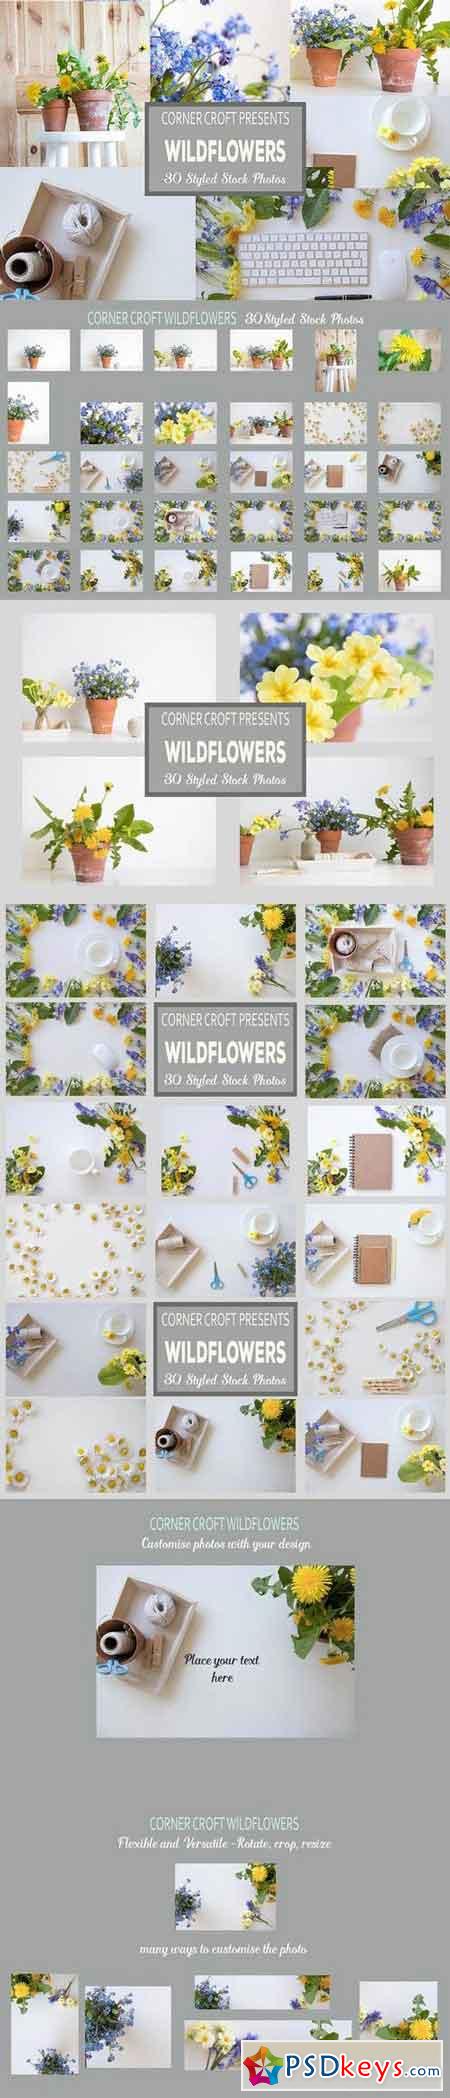 Wildflower Styled Stock Photo Bundle 1478836